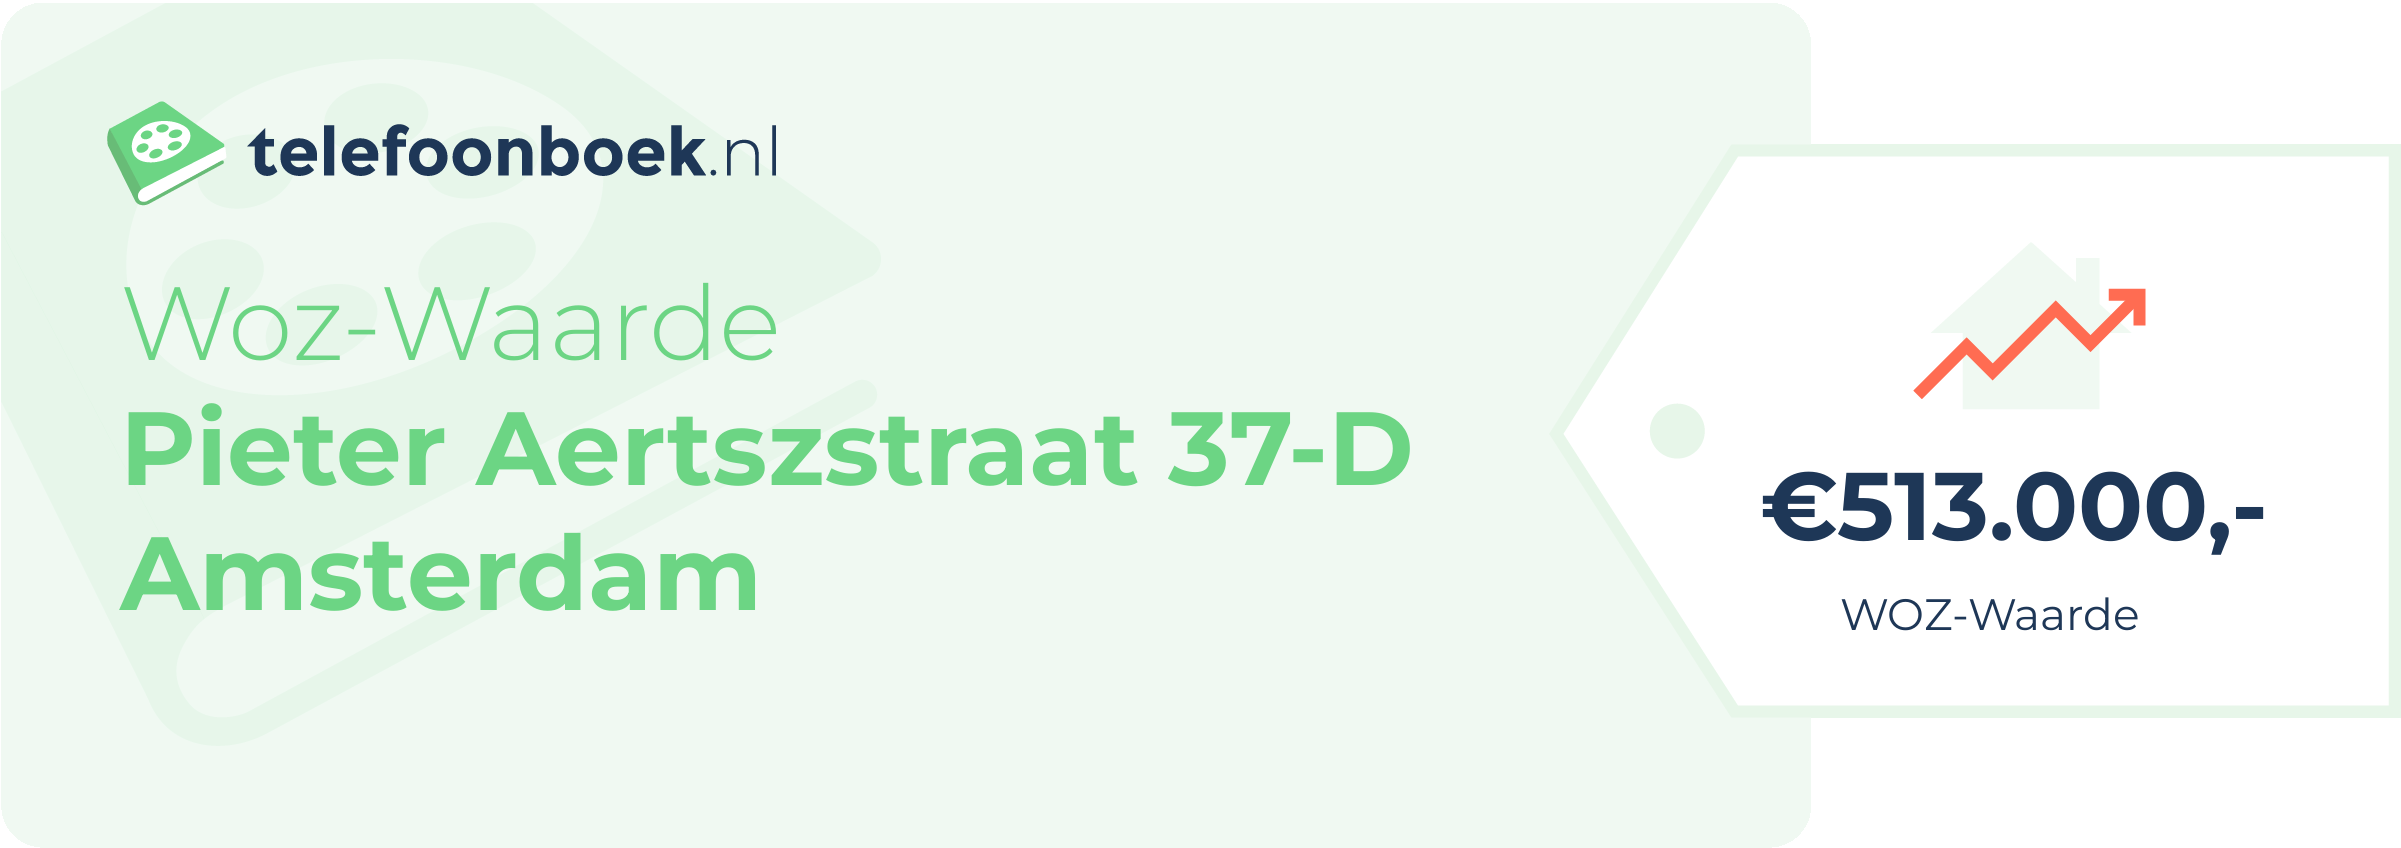 WOZ-waarde Pieter Aertszstraat 37-D Amsterdam